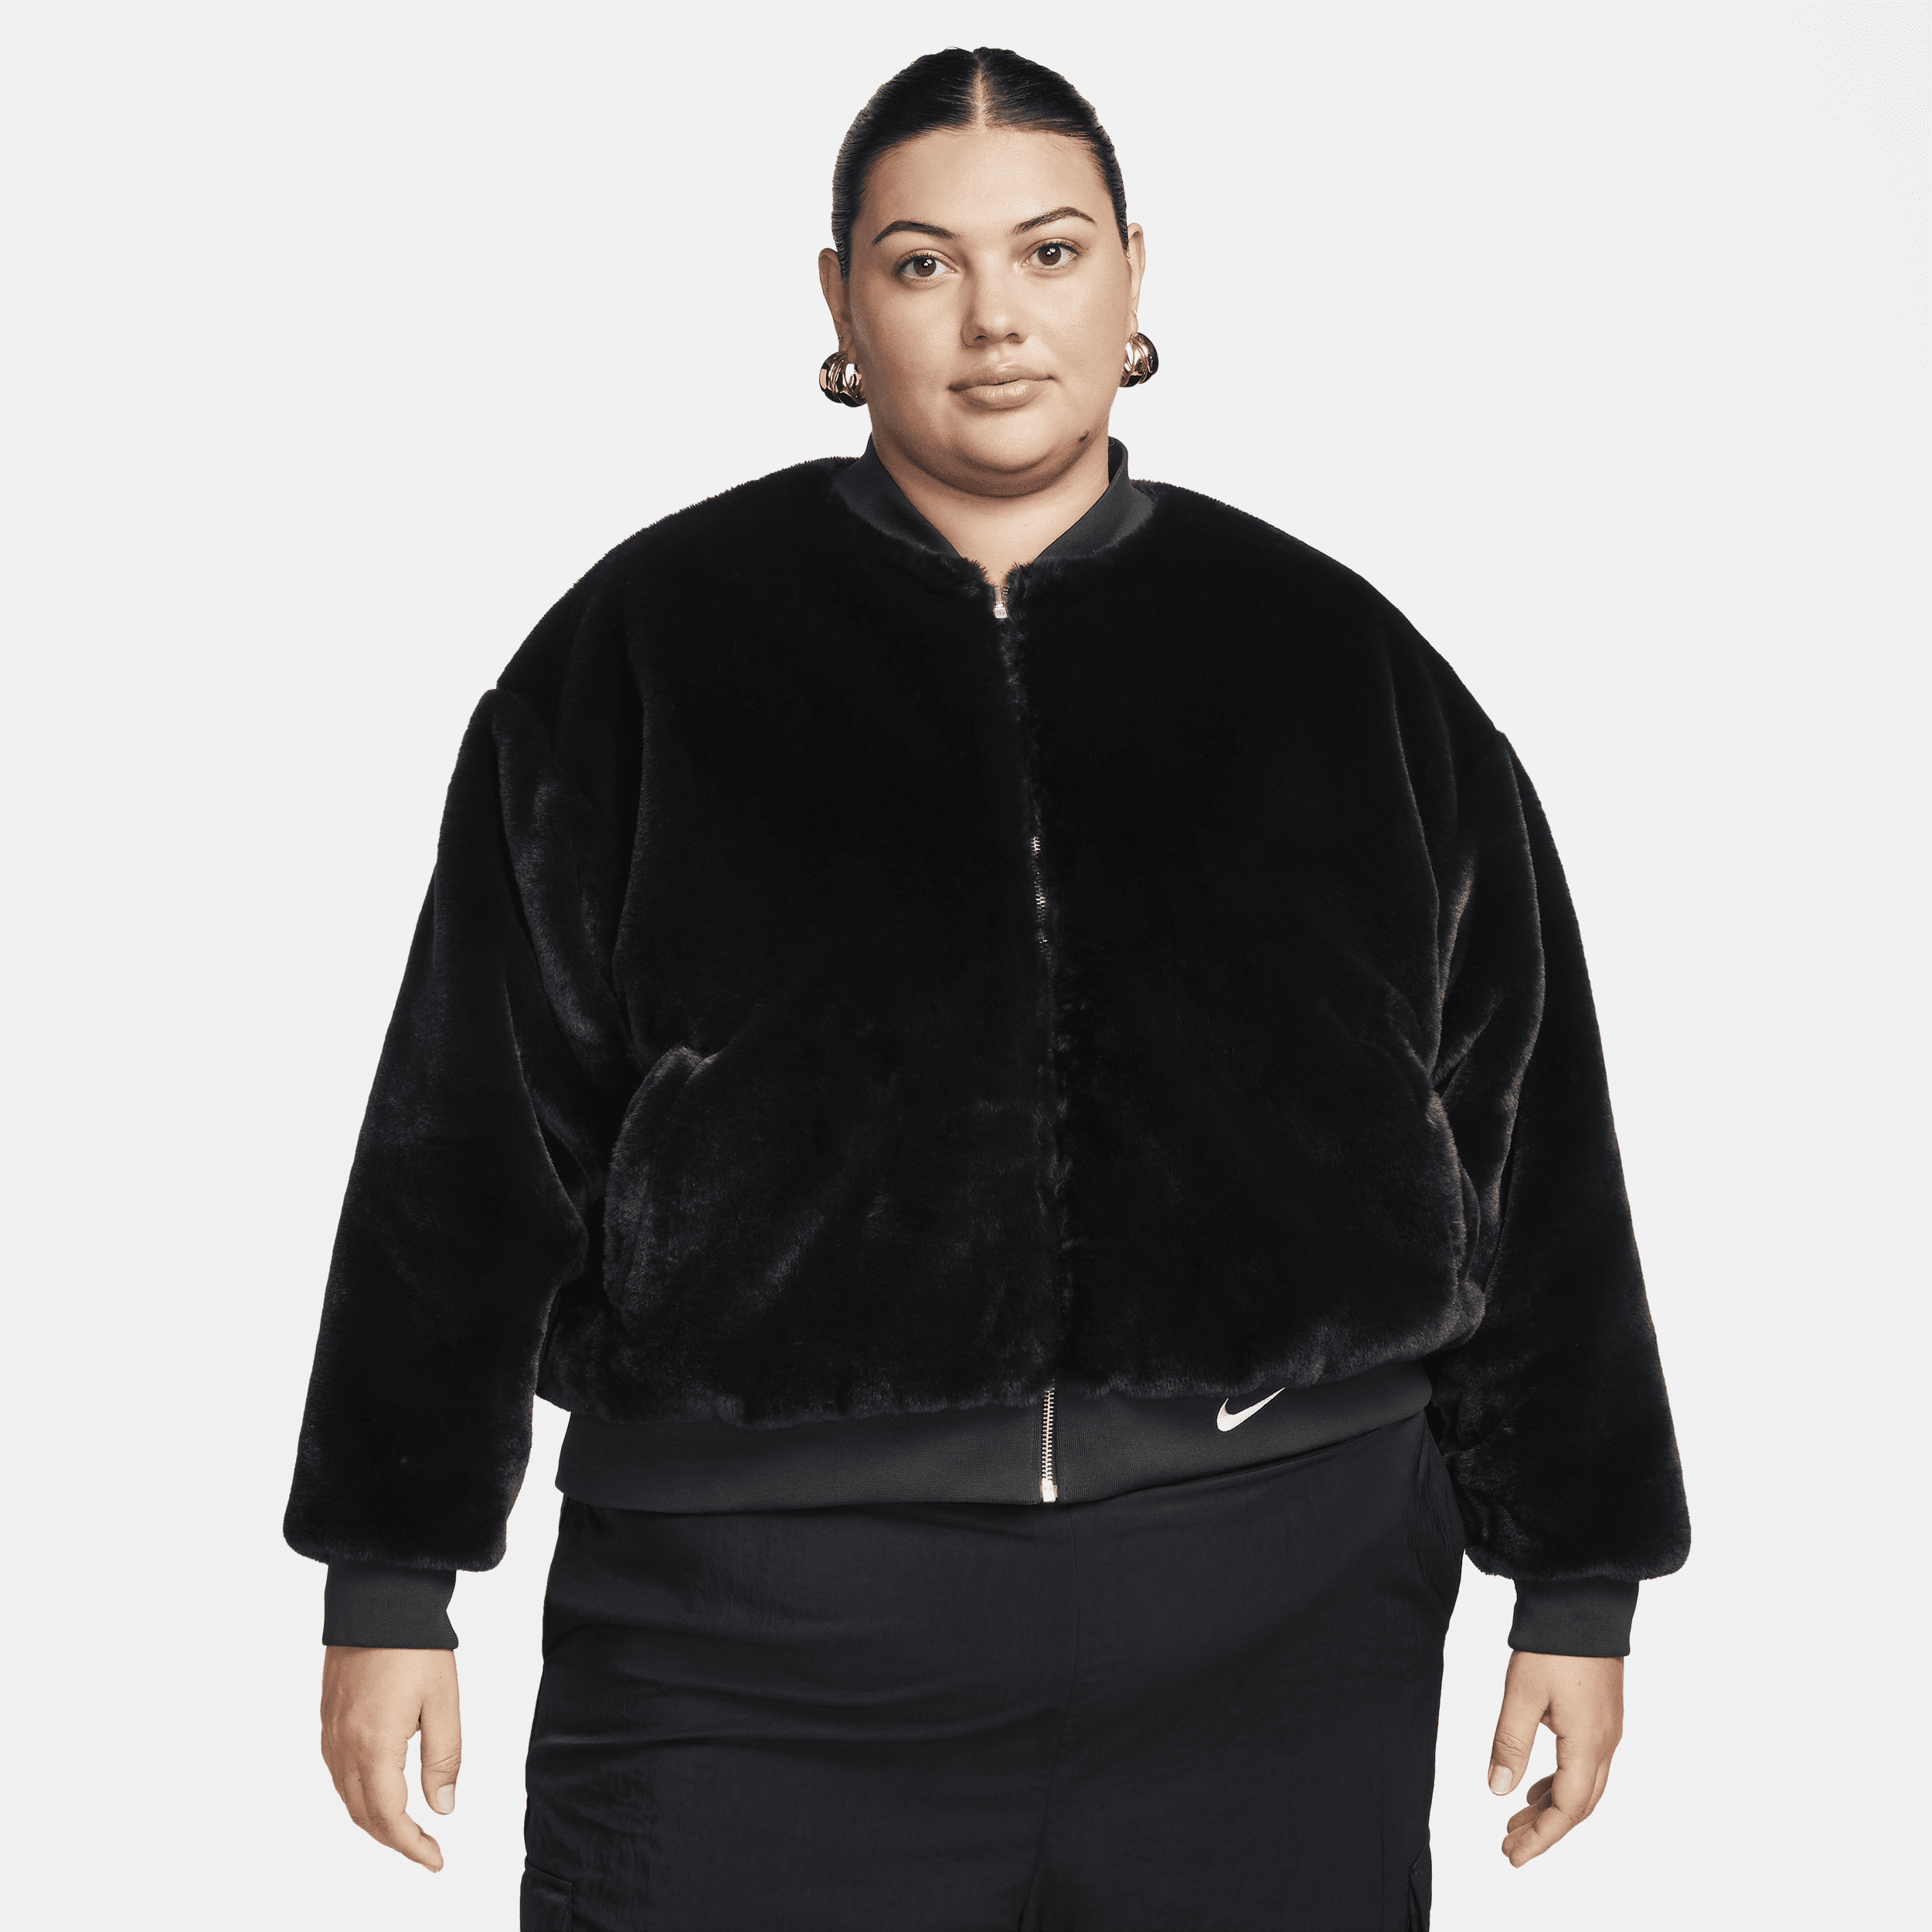 Vendbar Nike Sportswear-bomberjakke med imiteret pels til kvinder (Plus size) - sort